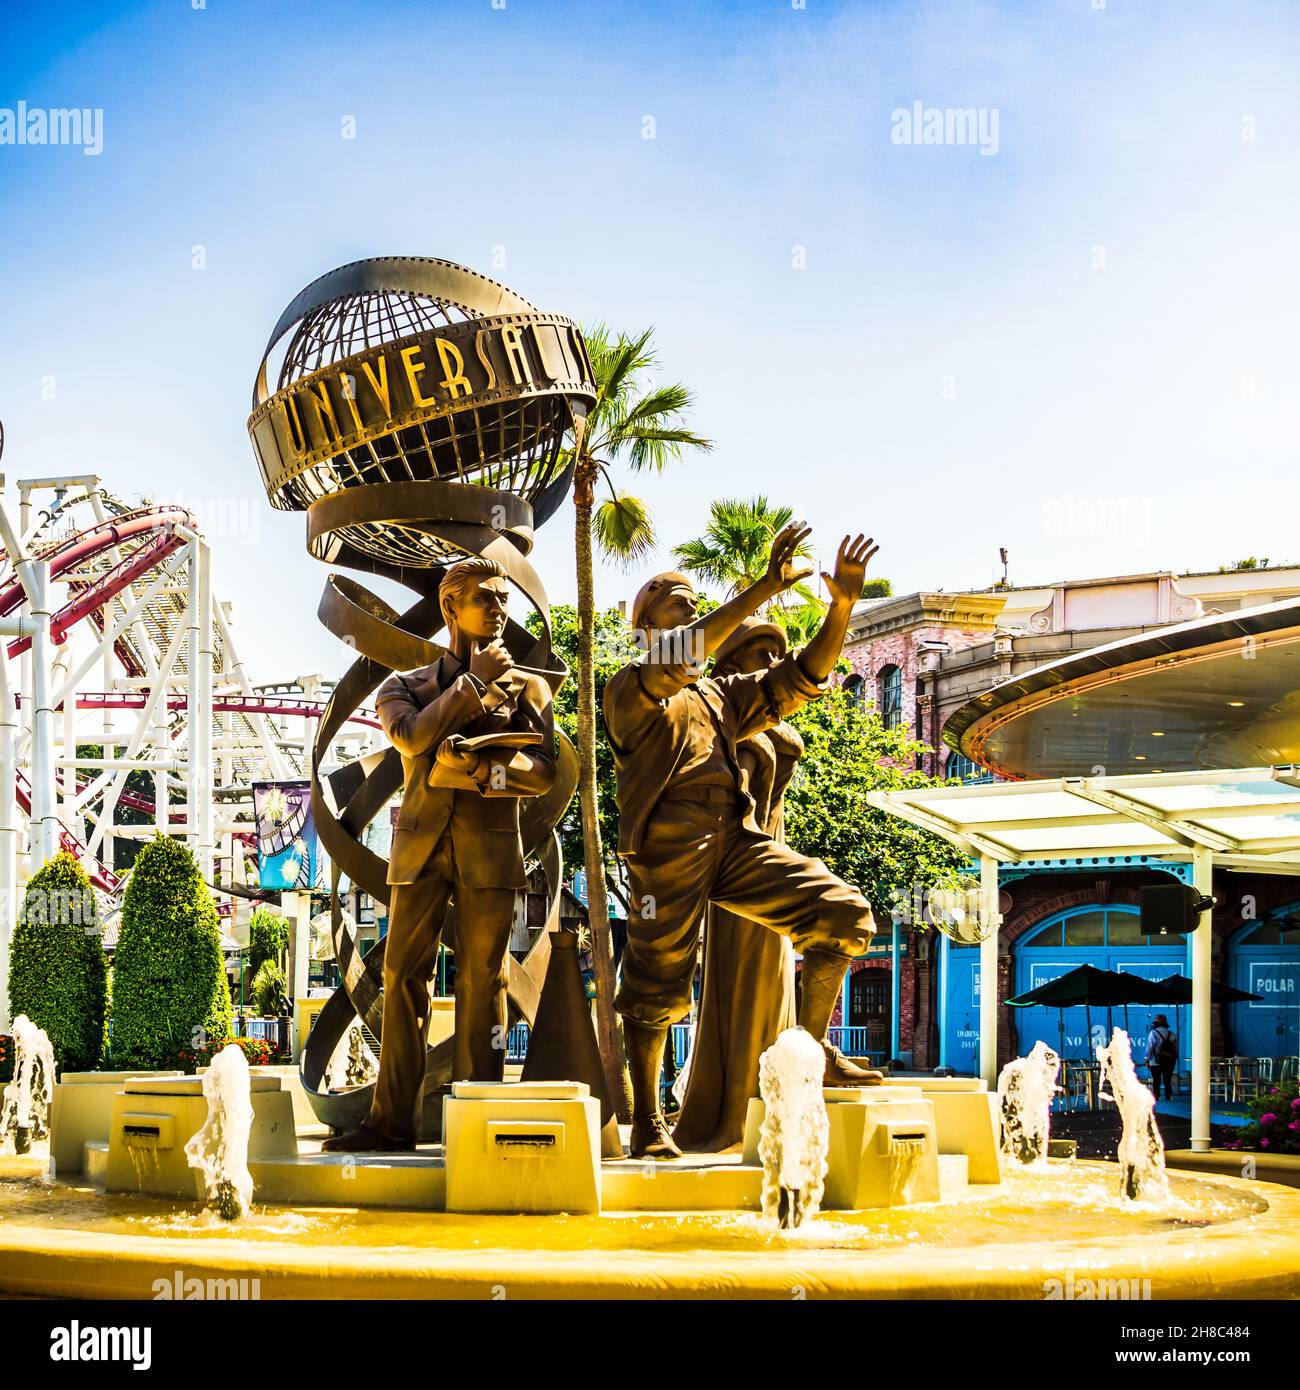 Statue of Universal Studios cinematographer and his team in Universal Studios Singapore. Stock Photo